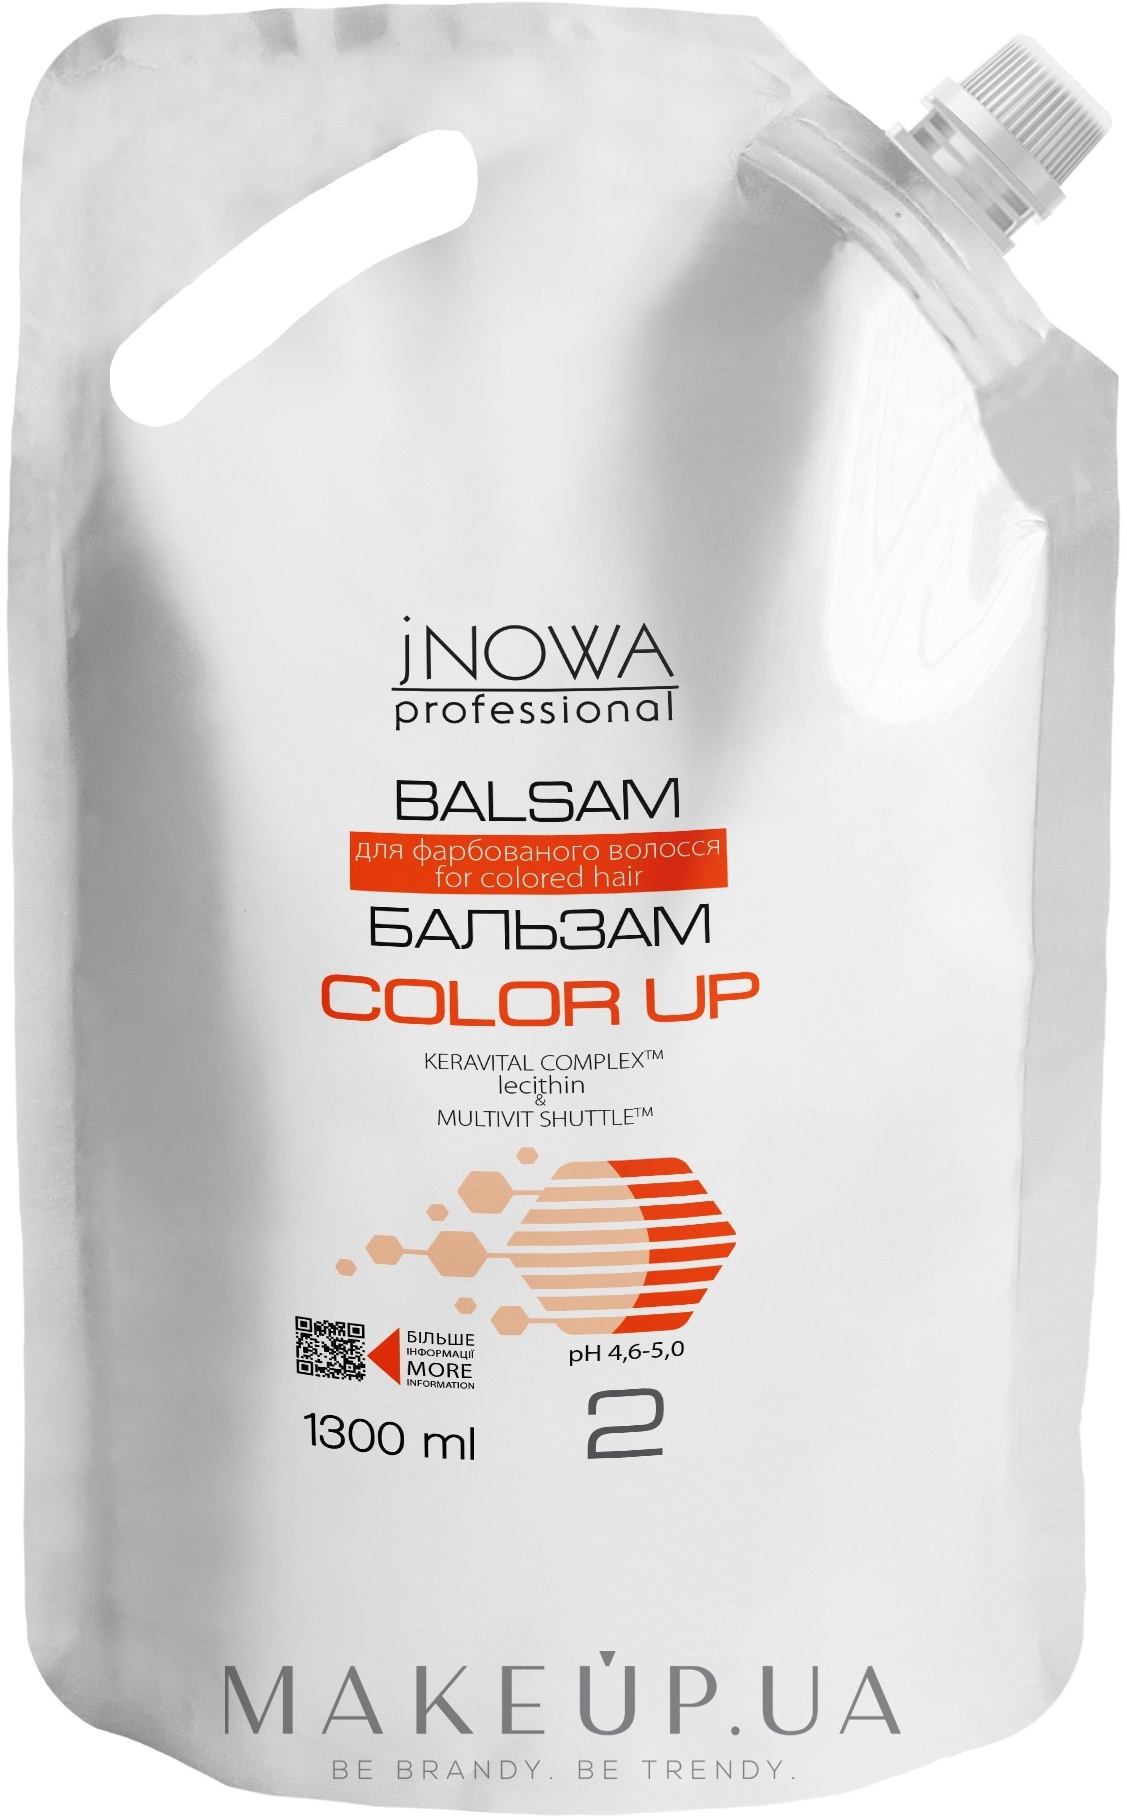 Бальзам для фарбованого волосся - JNOWA Professional 2 Color Up Hair Balm (дой-пак) — фото 1300ml